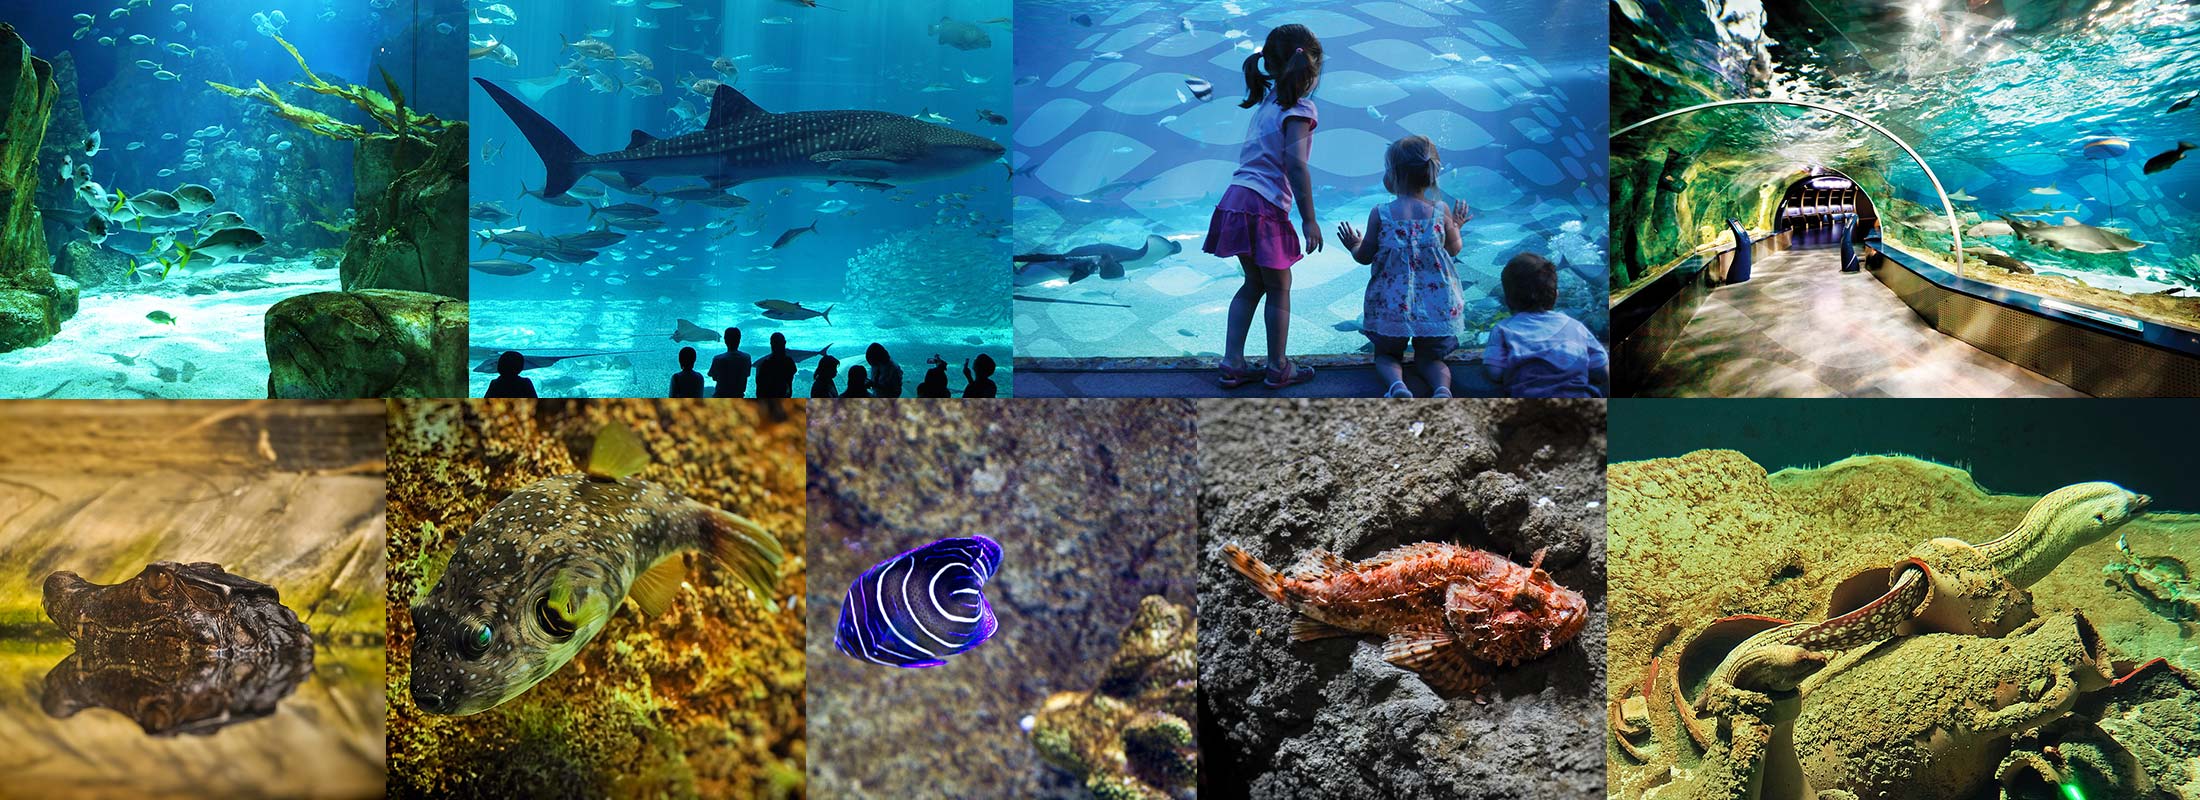 istanbul-Aquarium-Florya-Aqua-shopping-mall-tour